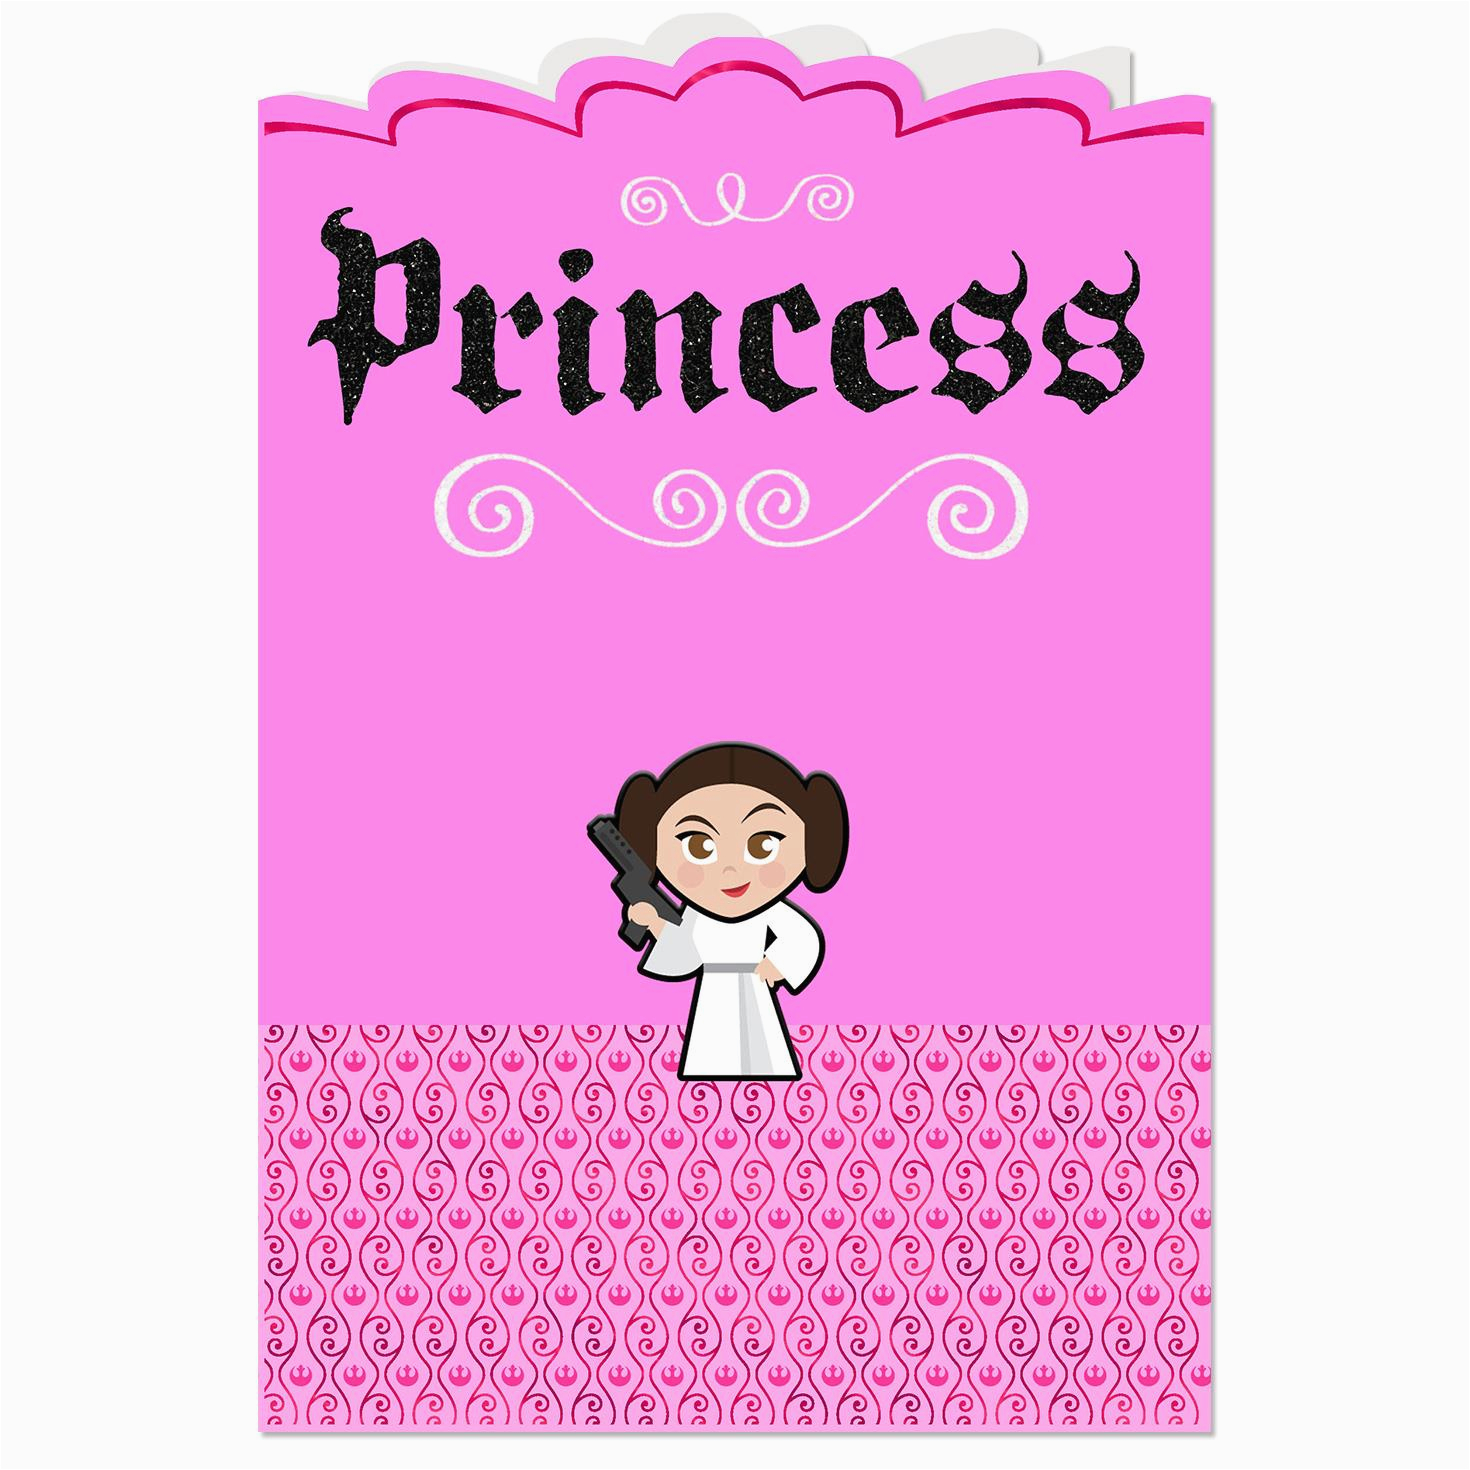 star wars princess leia awesome girl birthday card 459hkb4772